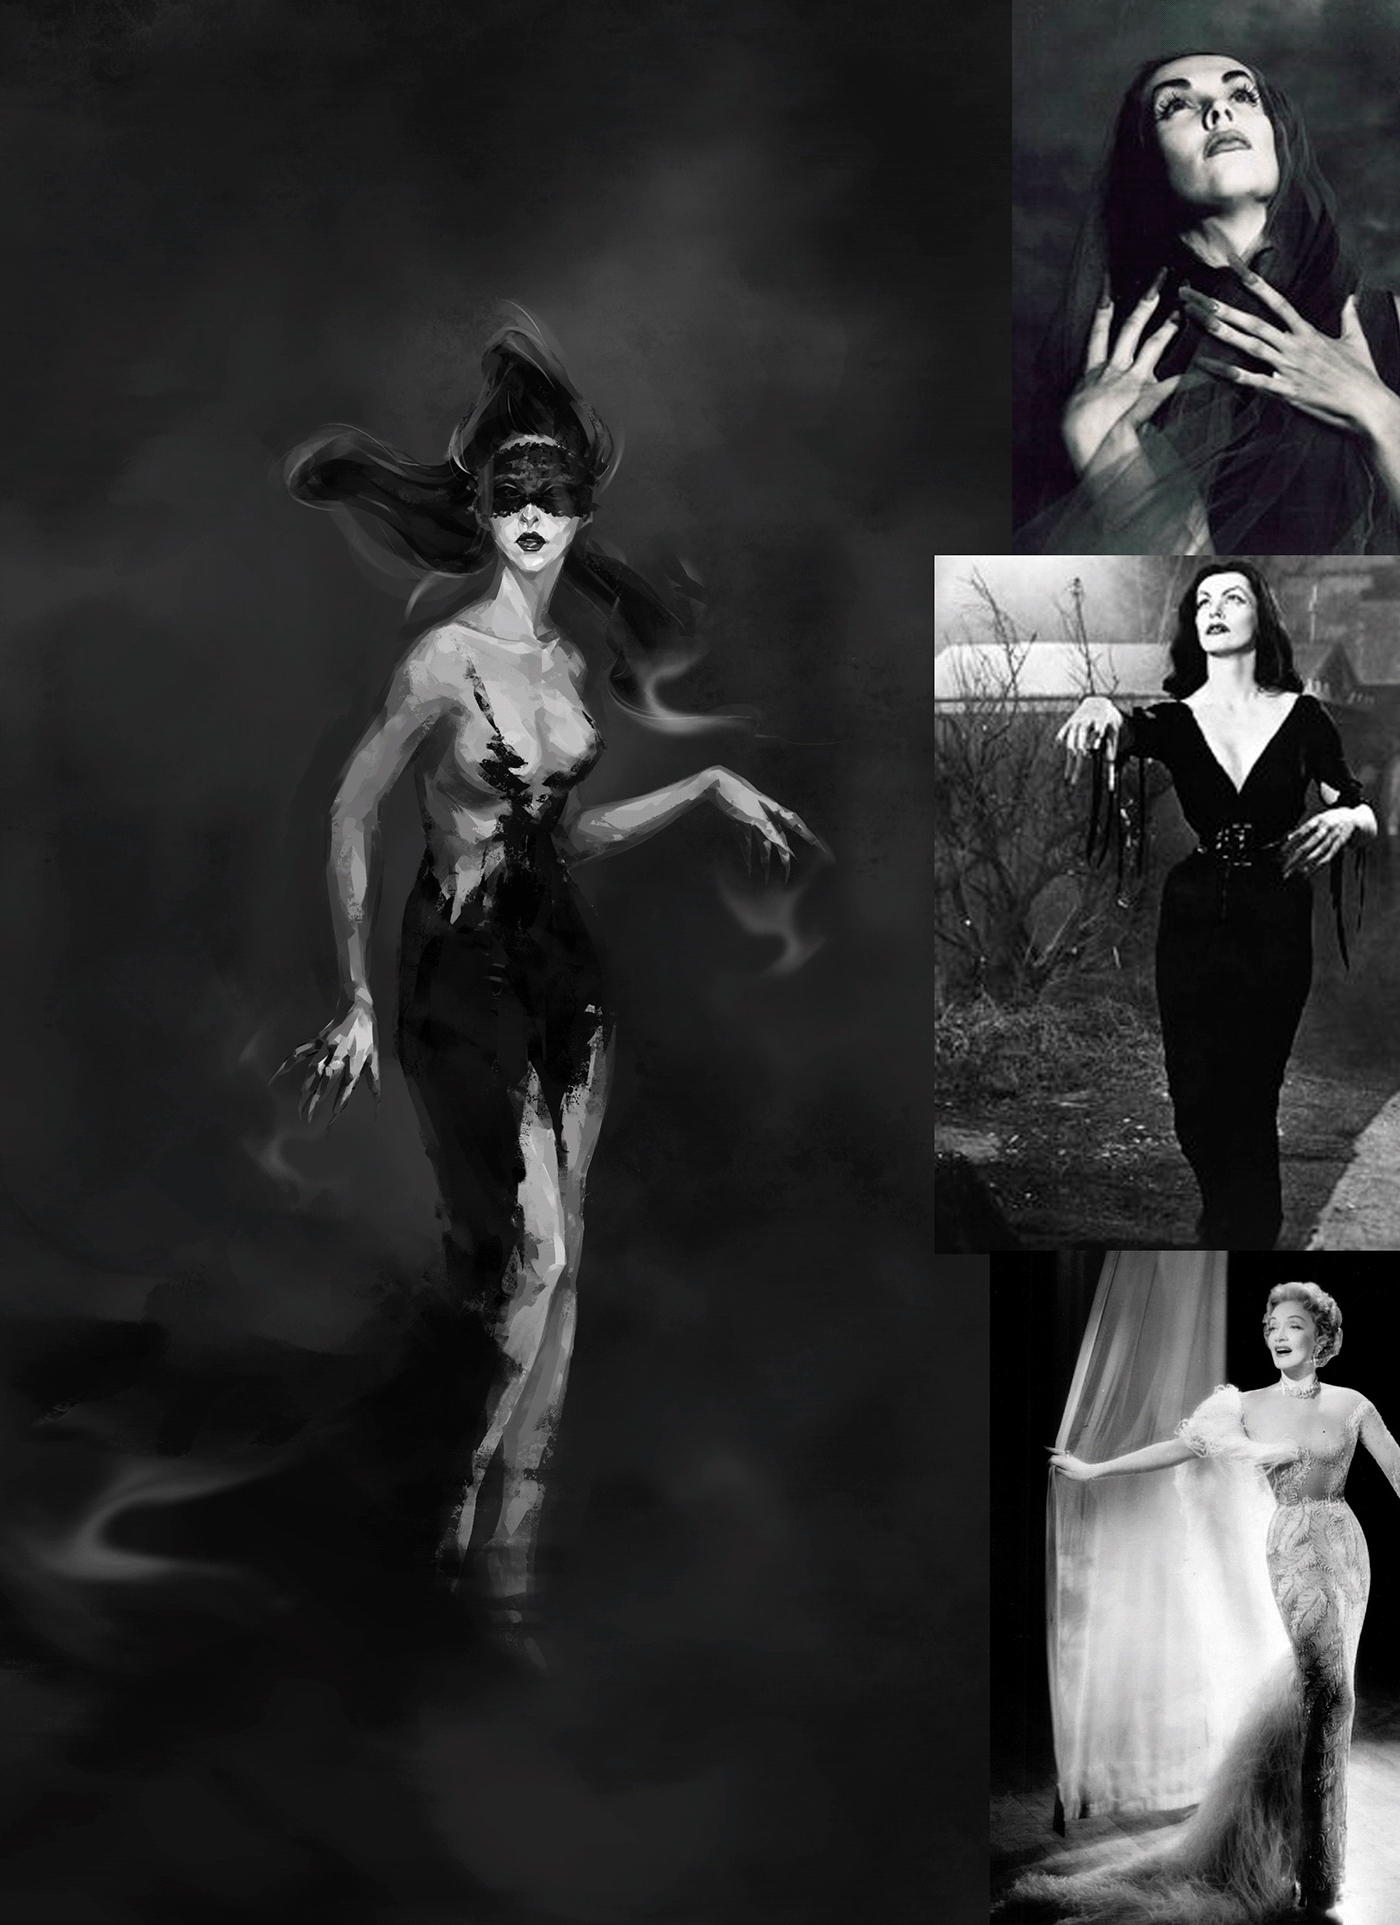 2dart banshee characterdesign conceptart darkart fantasyart retroinspiration vintage vintageposing witch